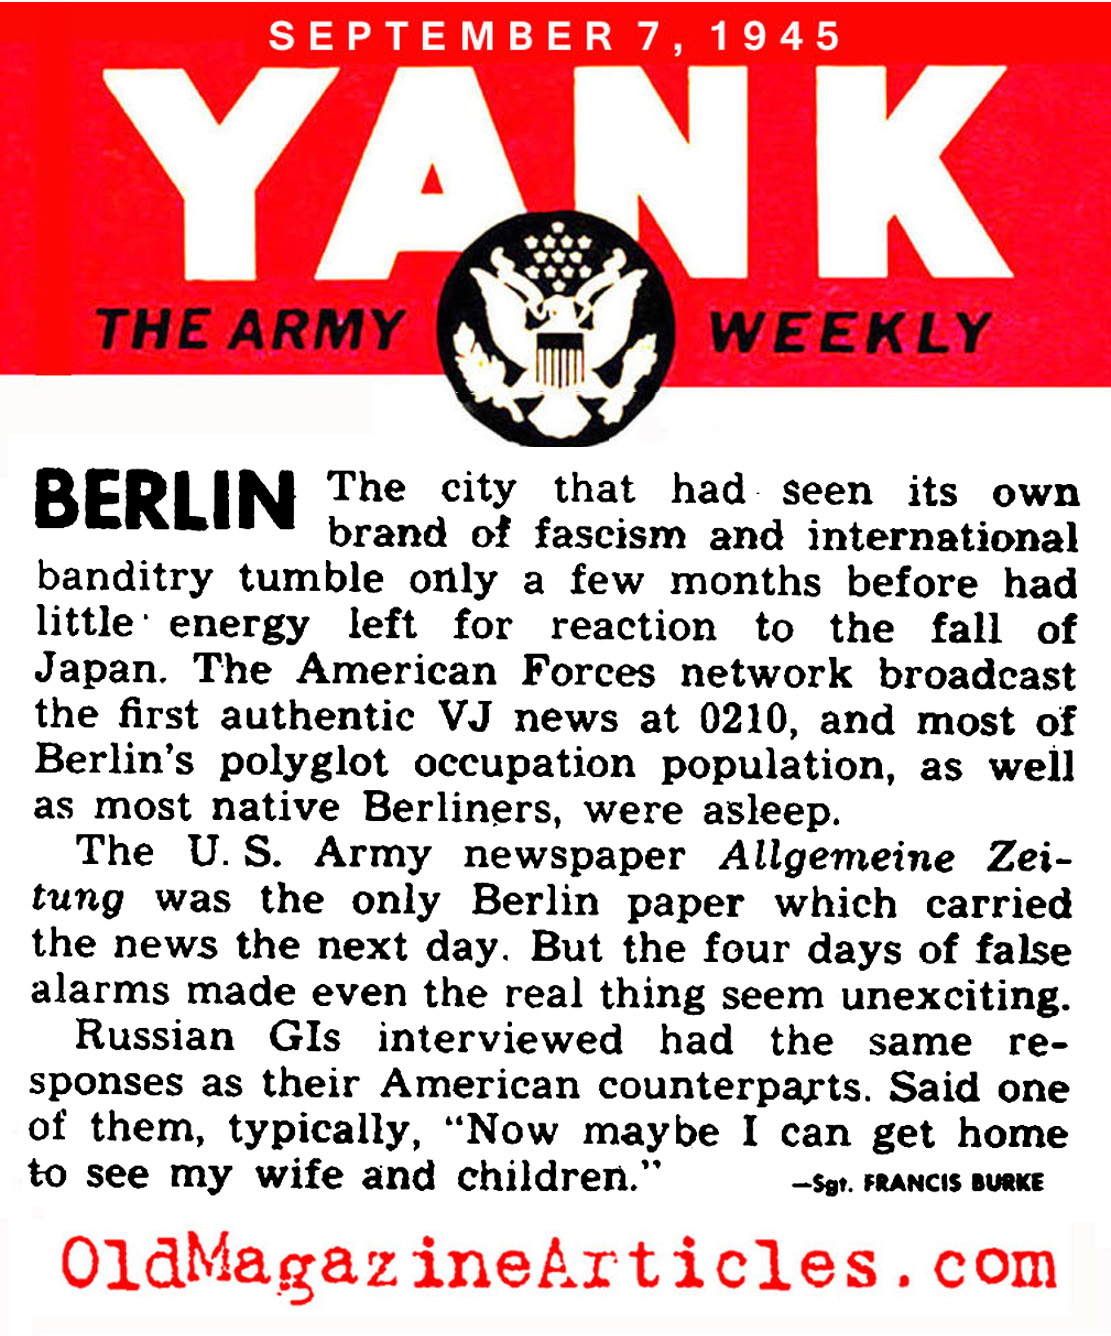 VJ - Day in Berlin (yank Magazine, 1945)